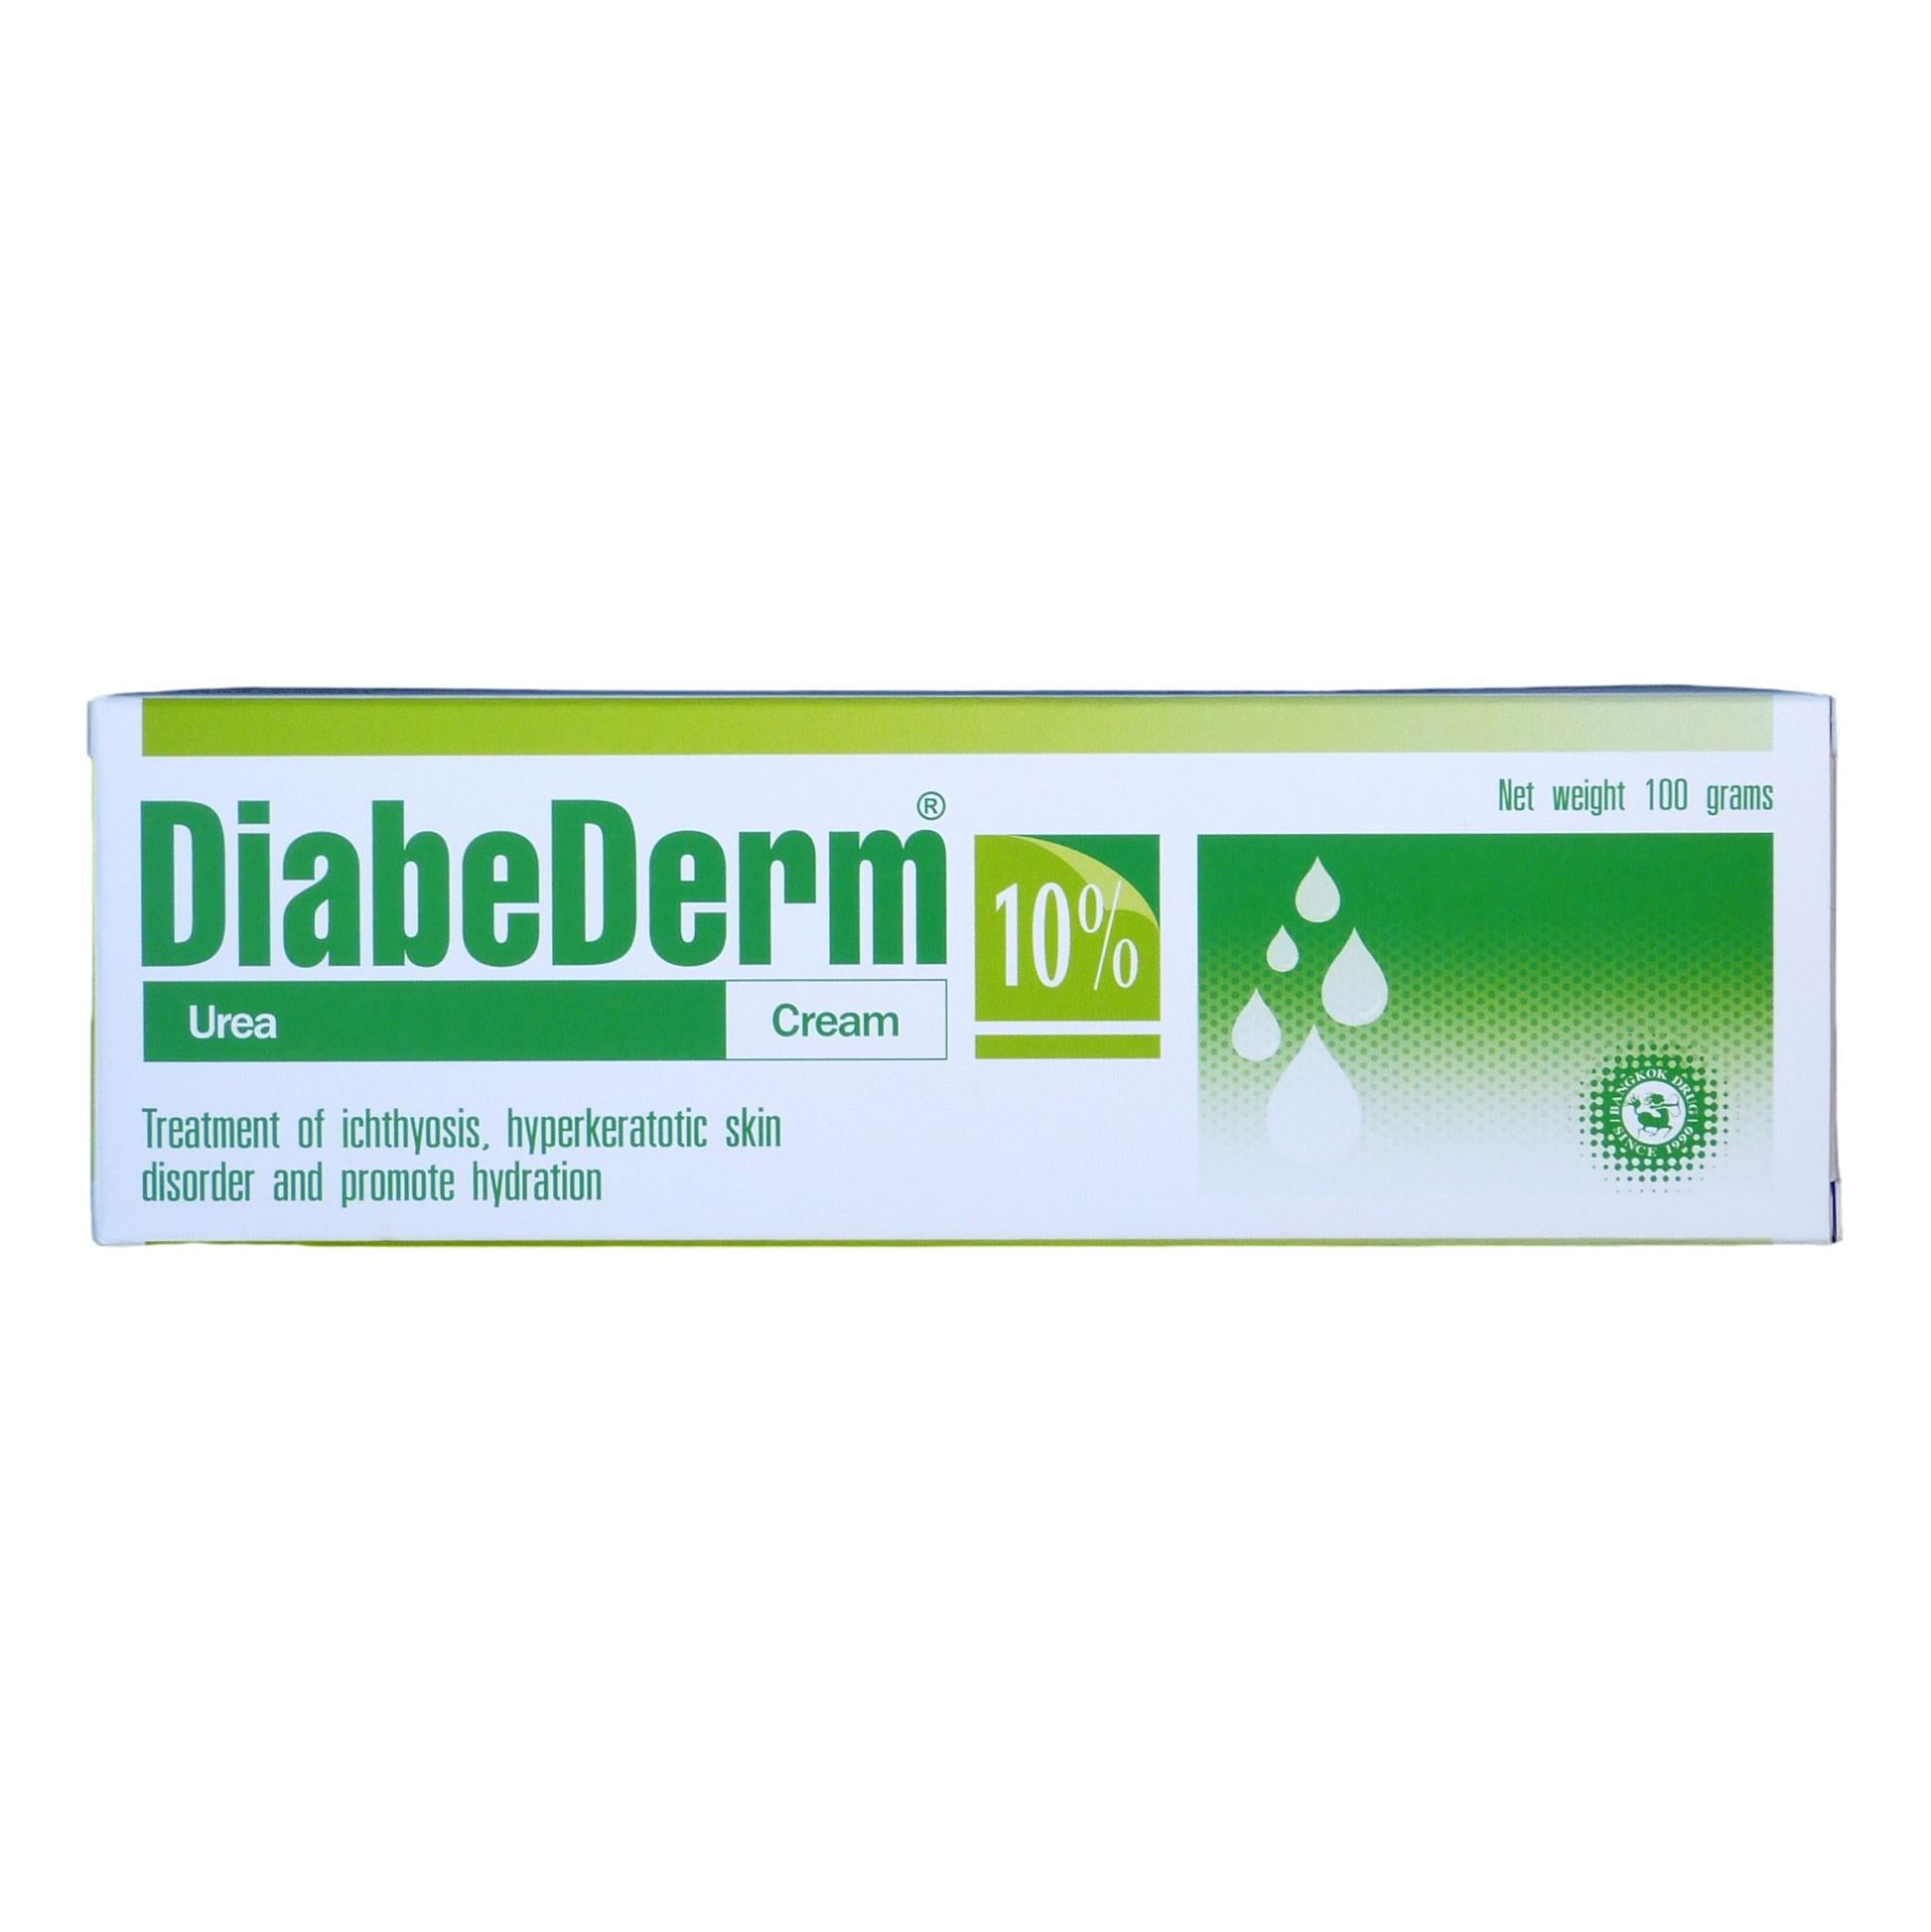 Diabederm 10% Urea Cream 100 grams - Asian Beauty Supply